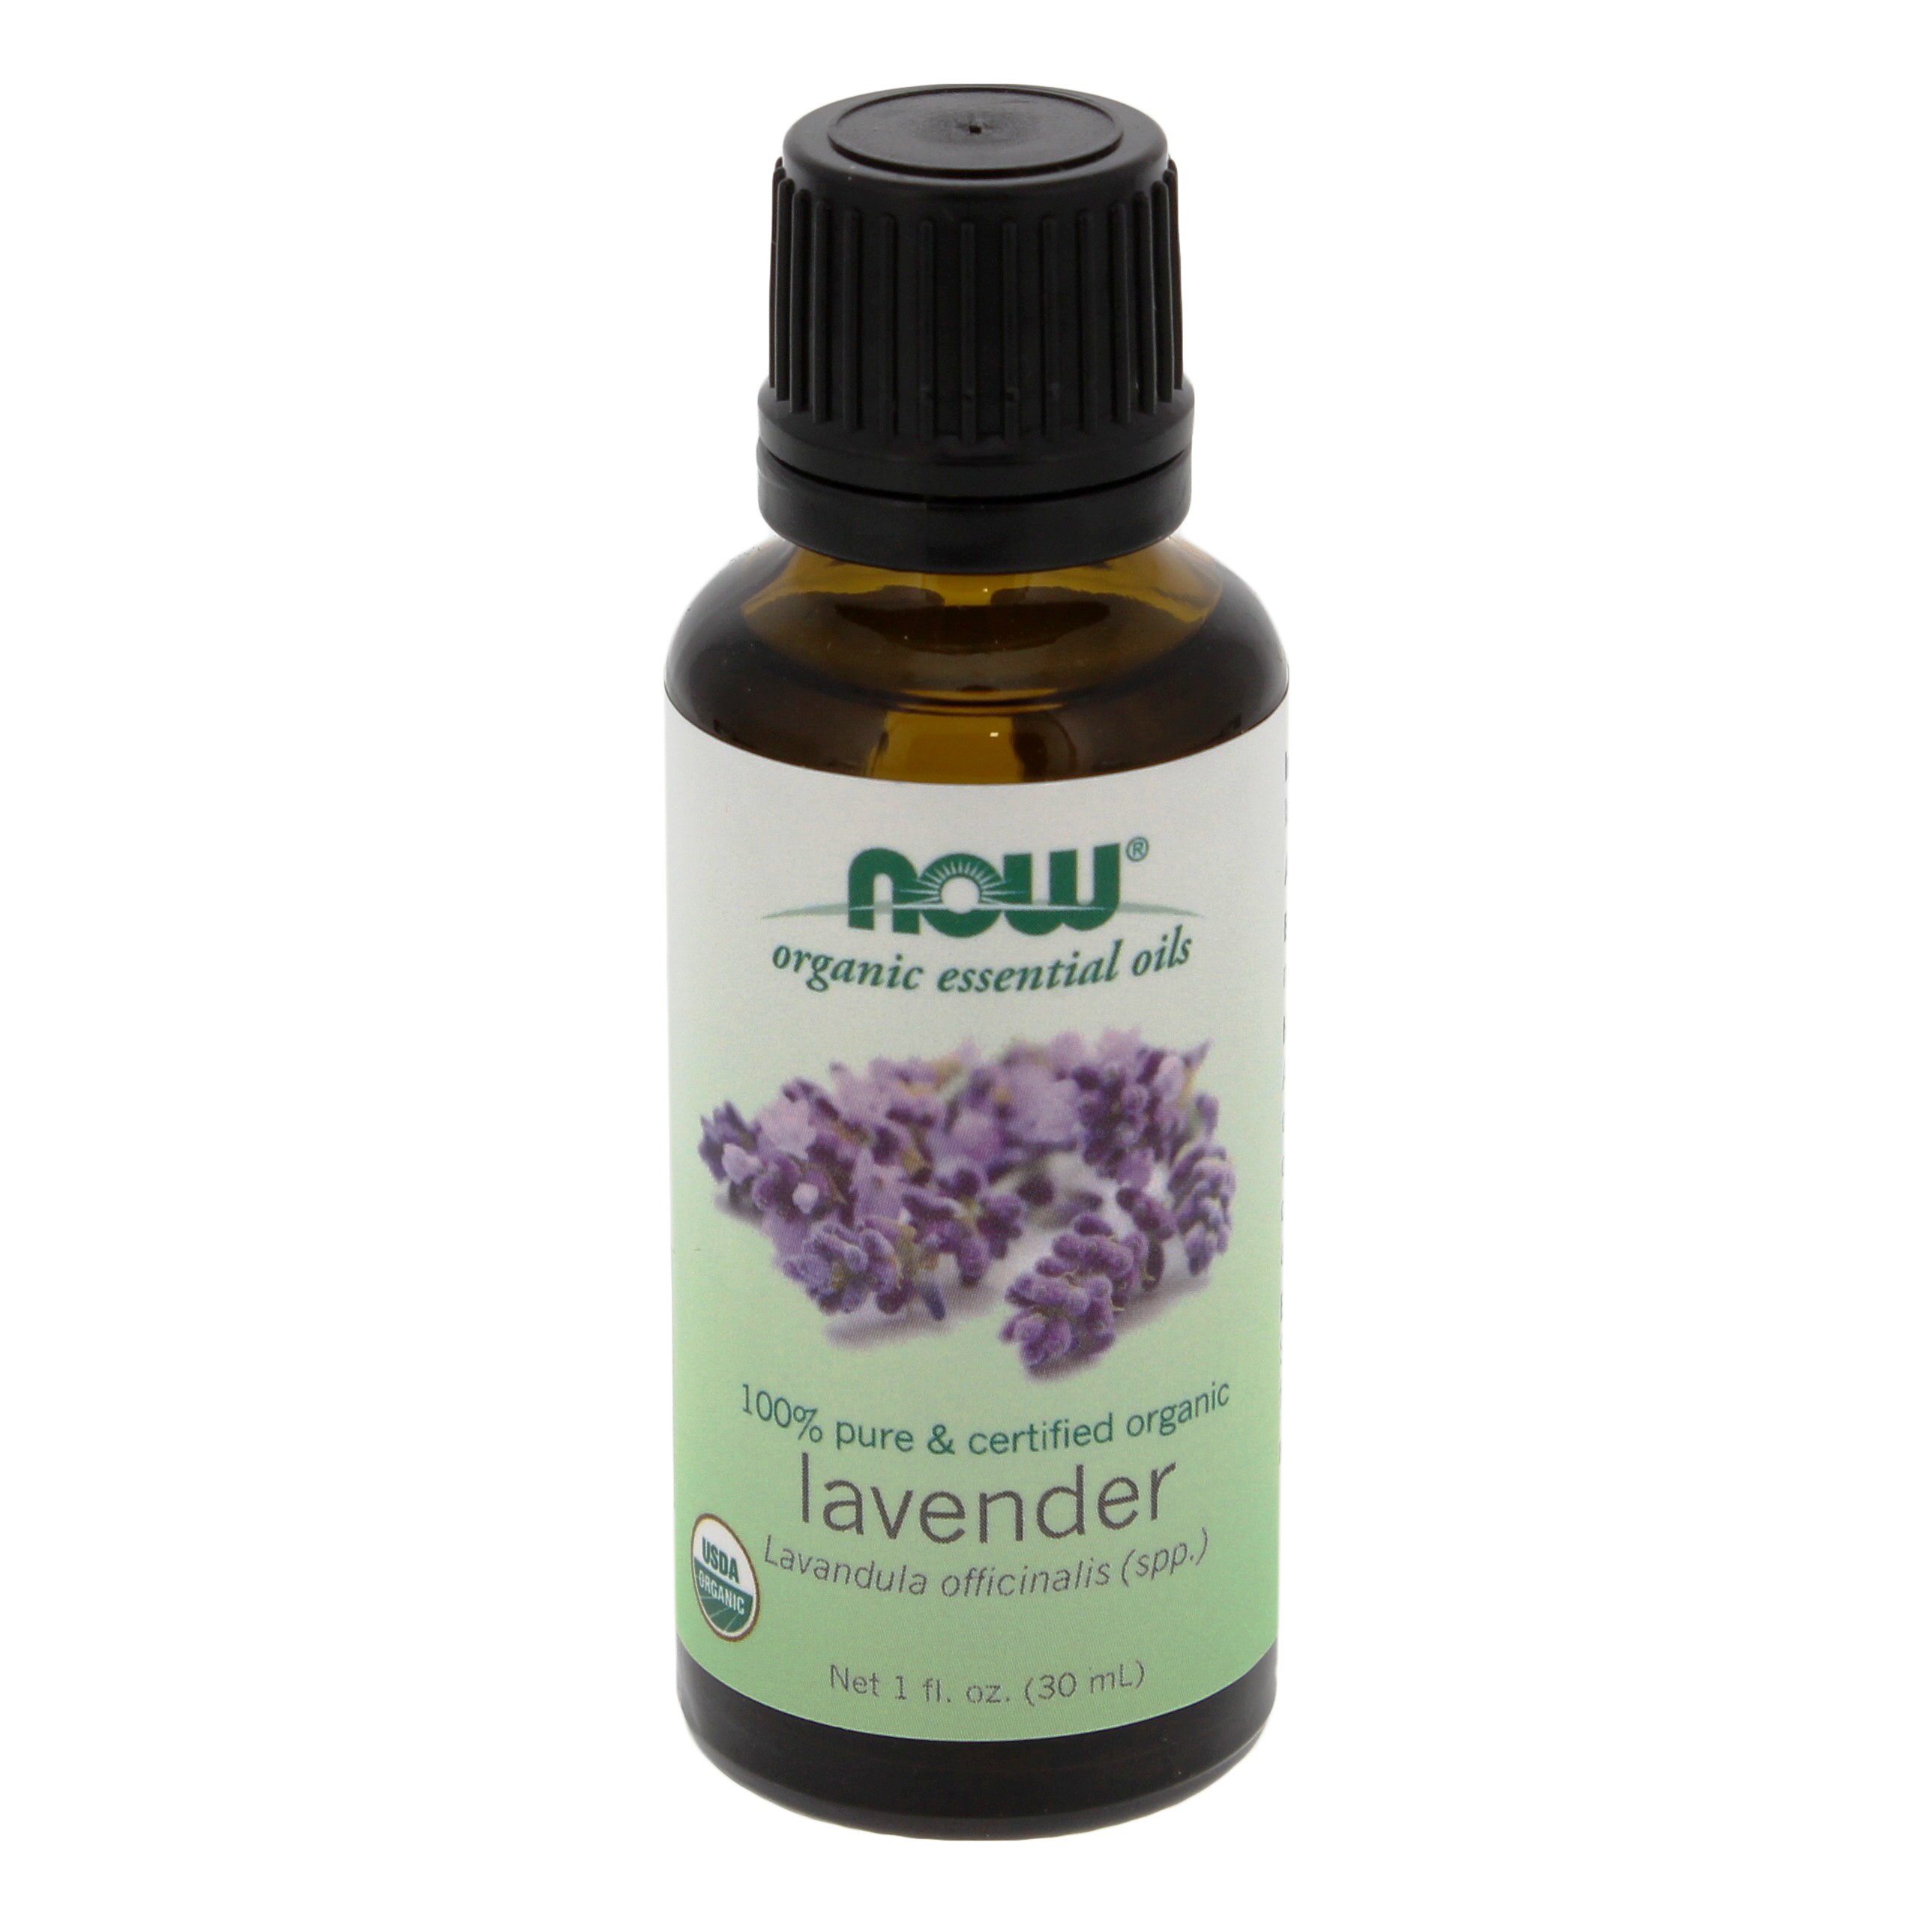 Buy Aravi Organic Lavender Essential Oil 100% Pure Oil for